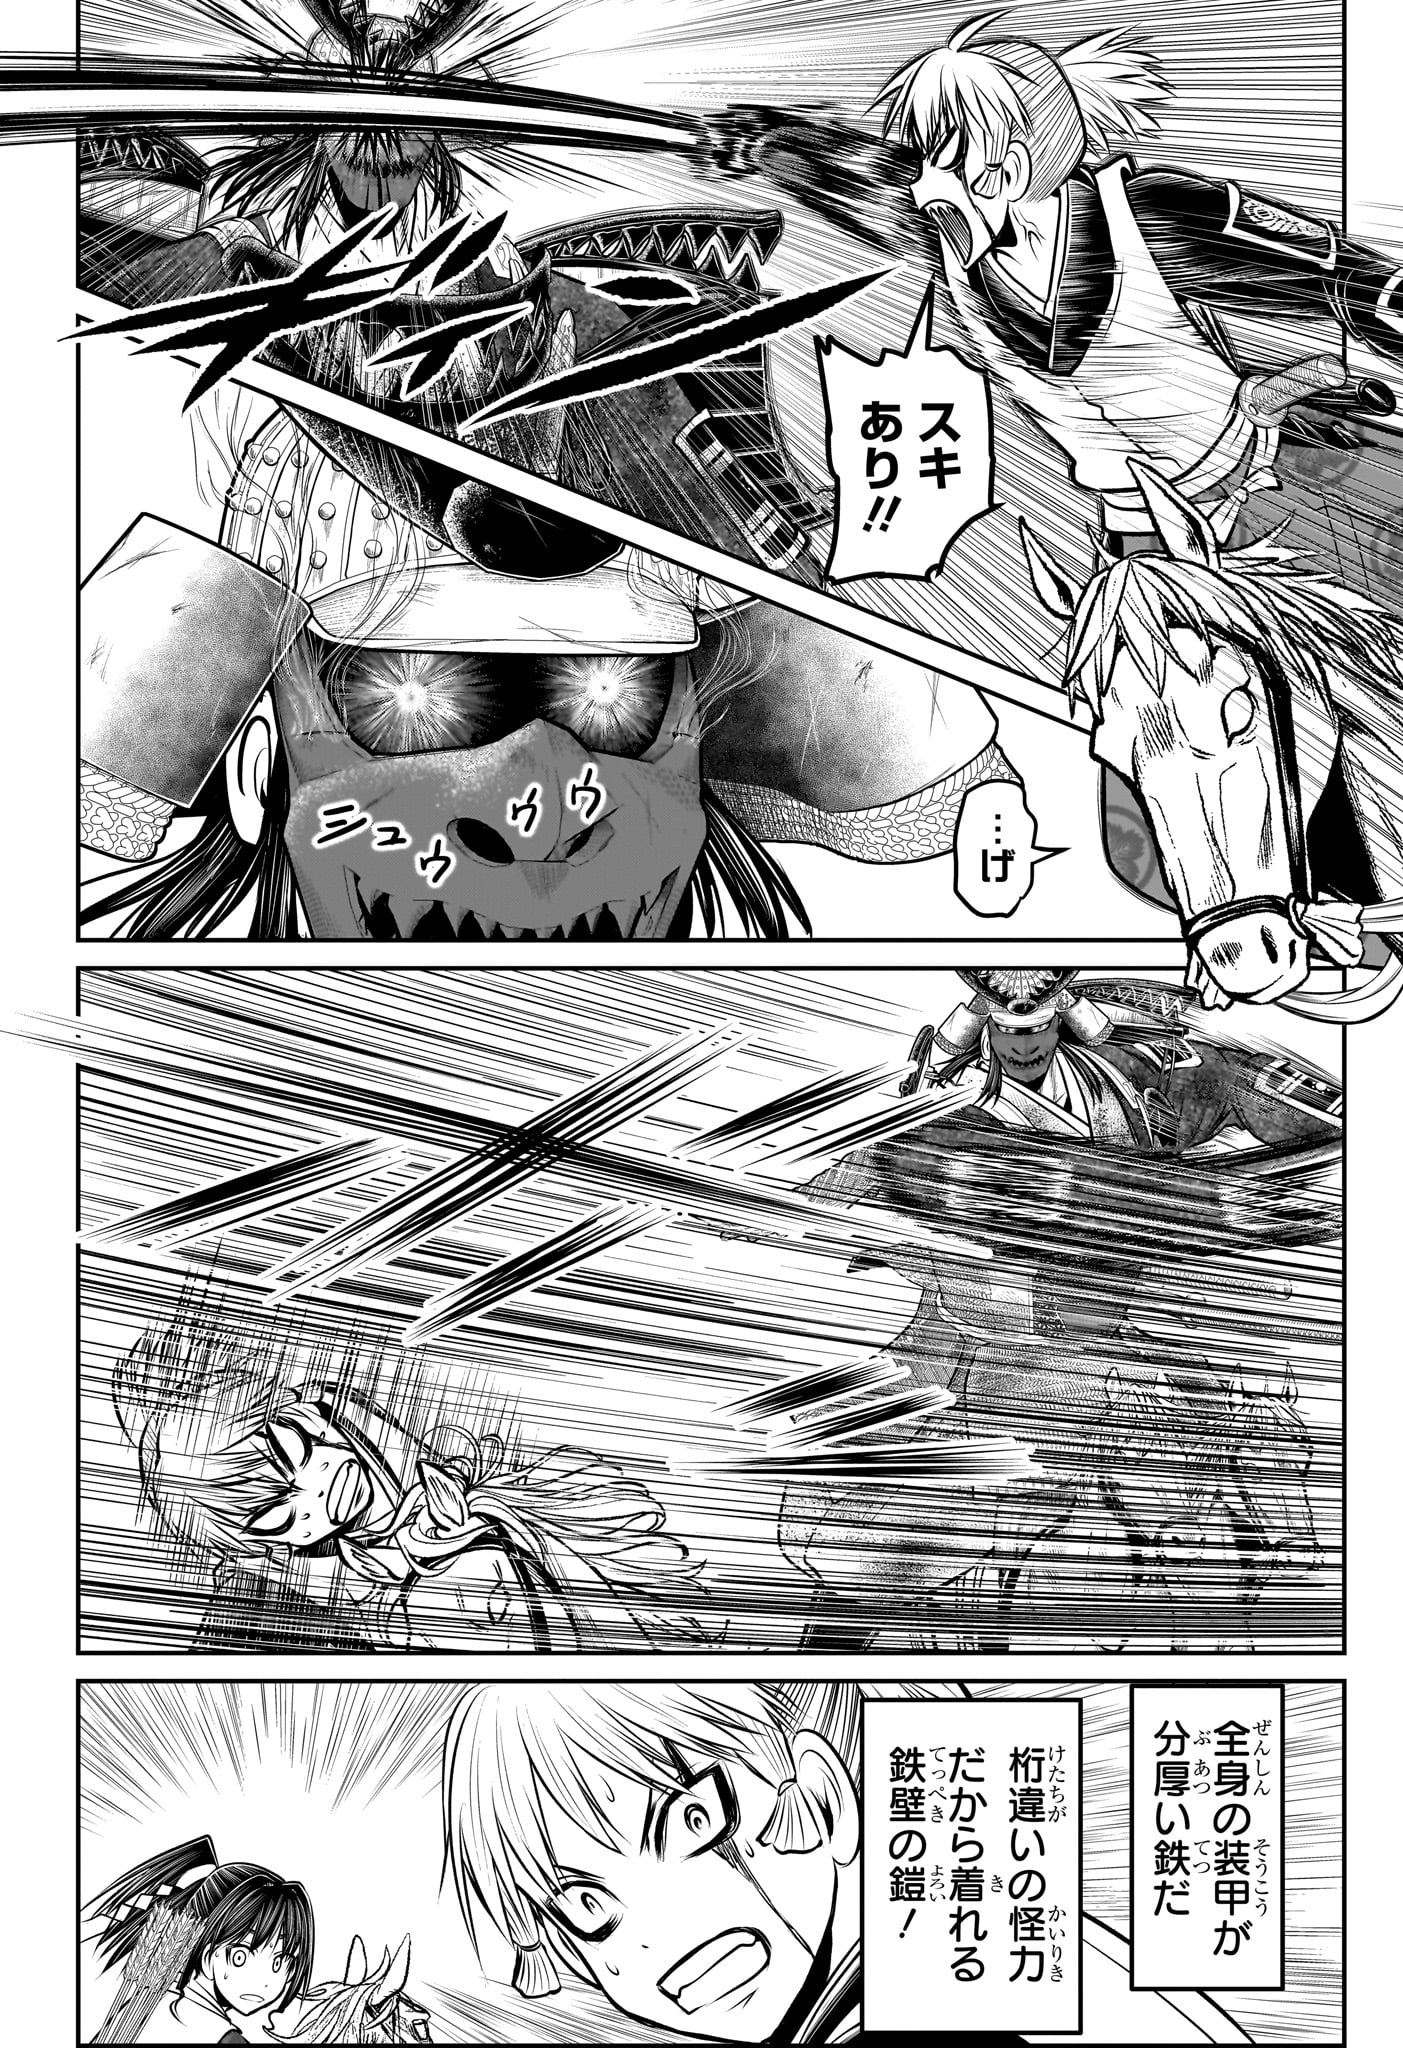 Nige Jouzu no Wakagimi - Chapter 144 - Page 2